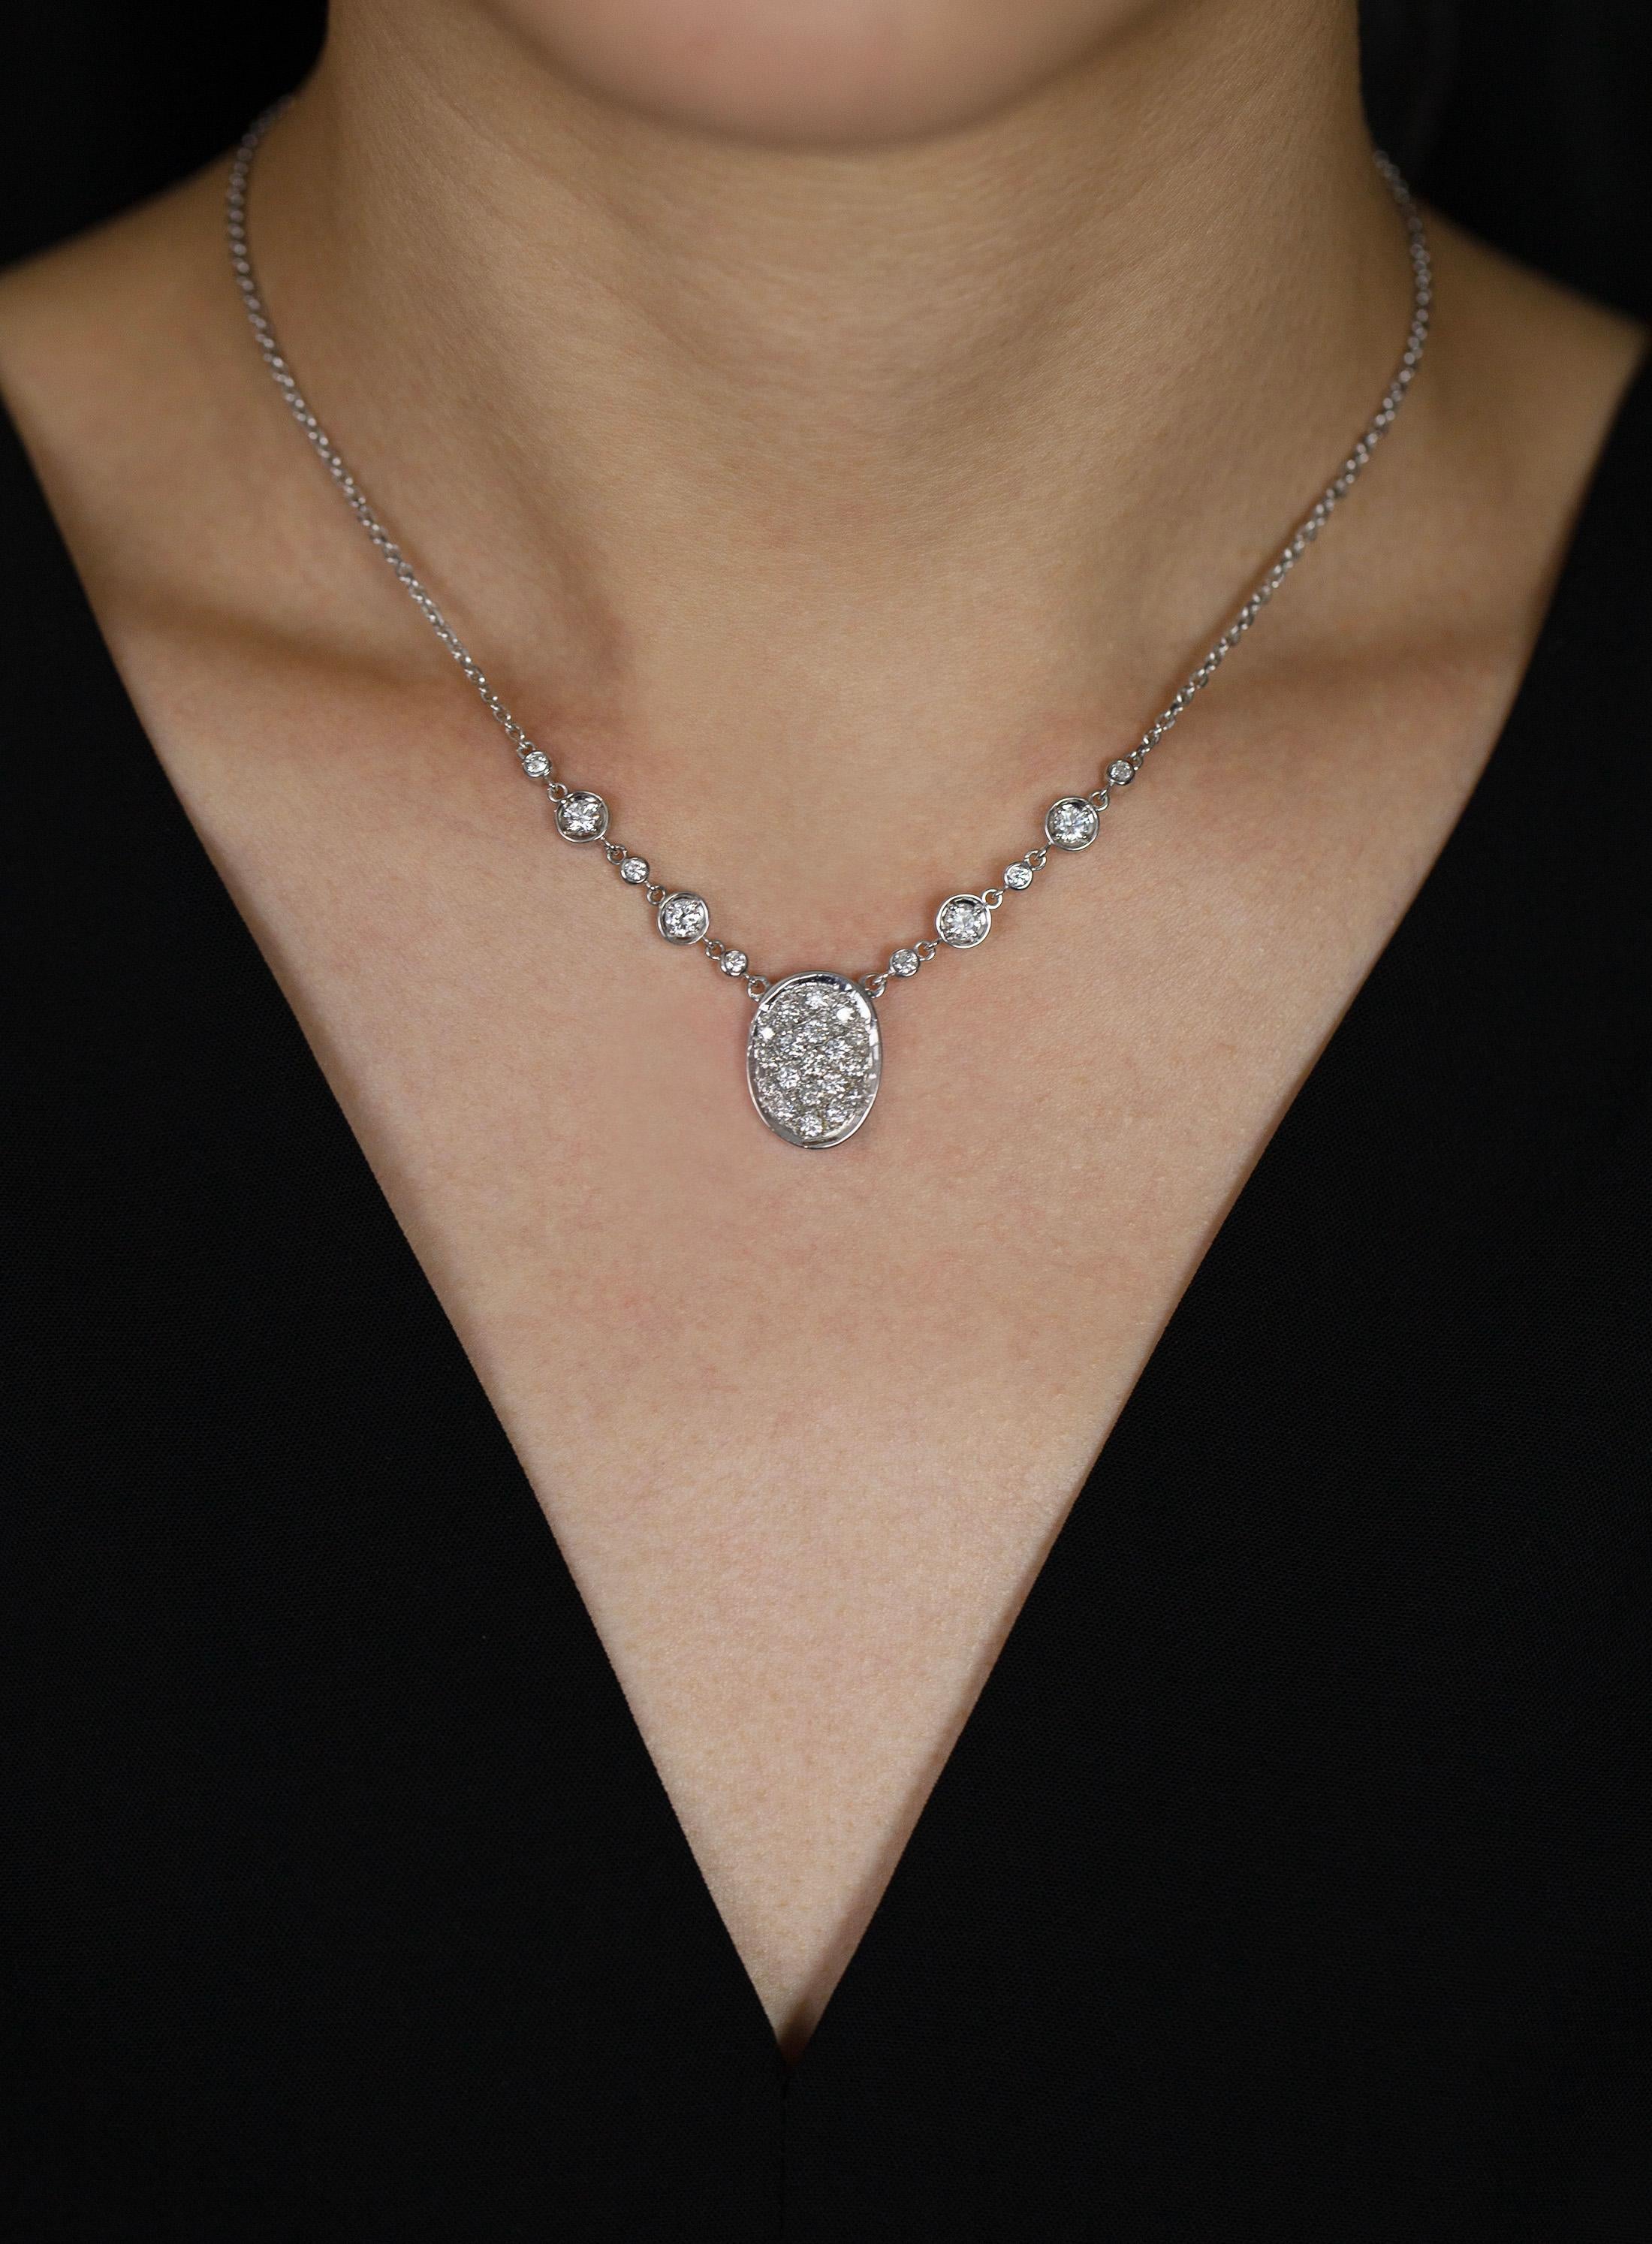 1.24 Carats Total Round Cut Diamond Fashion Pendant Necklace For Sale 1